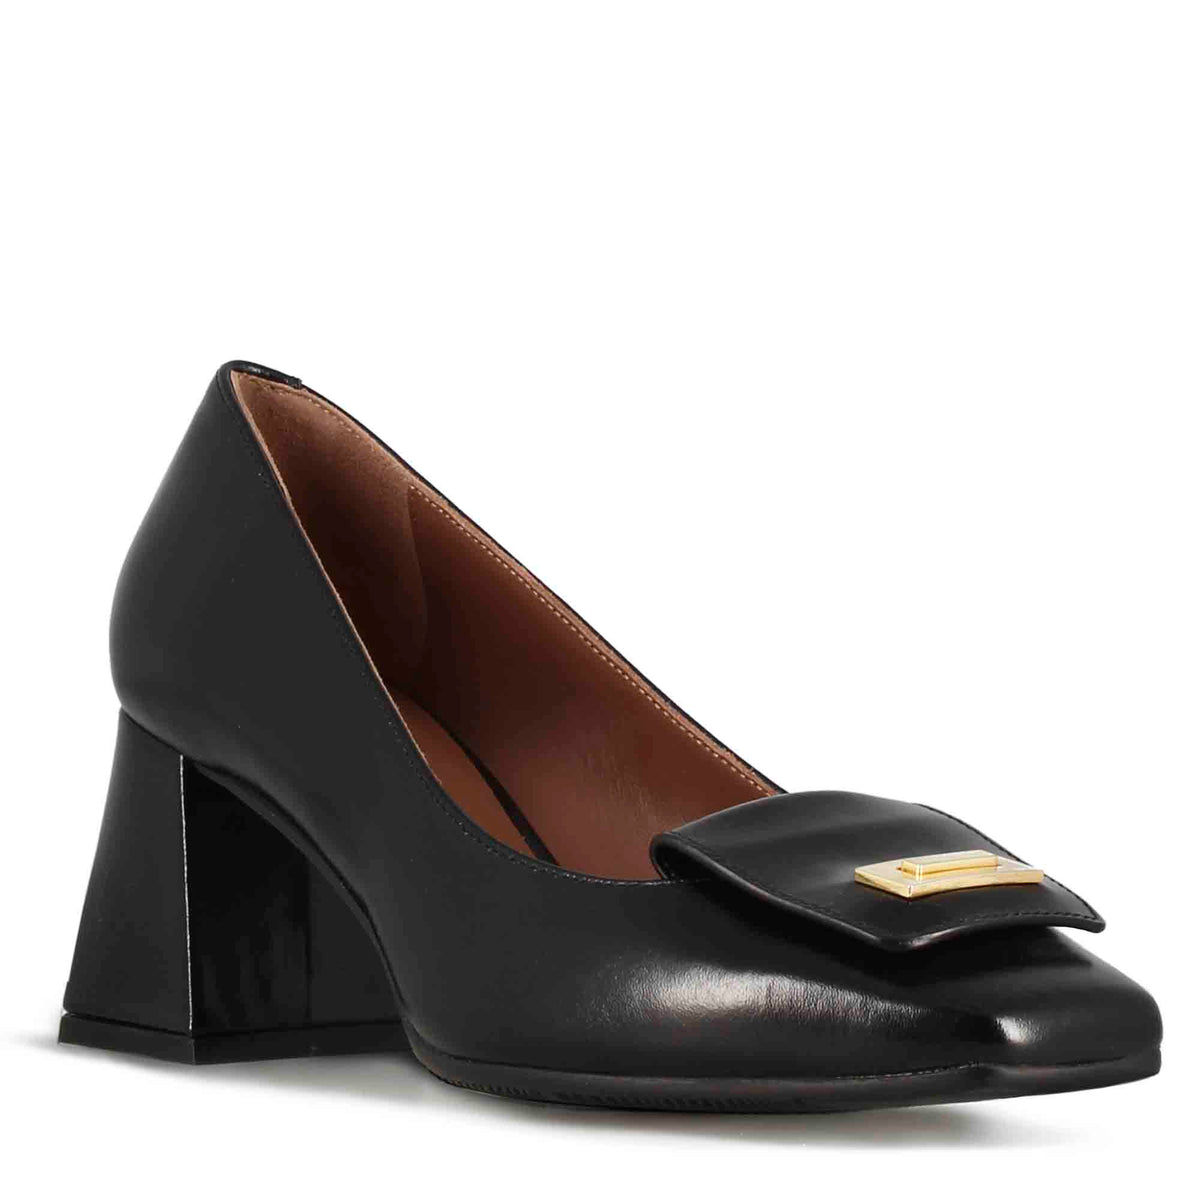 Elegant women's décolleté in black leather with square toe